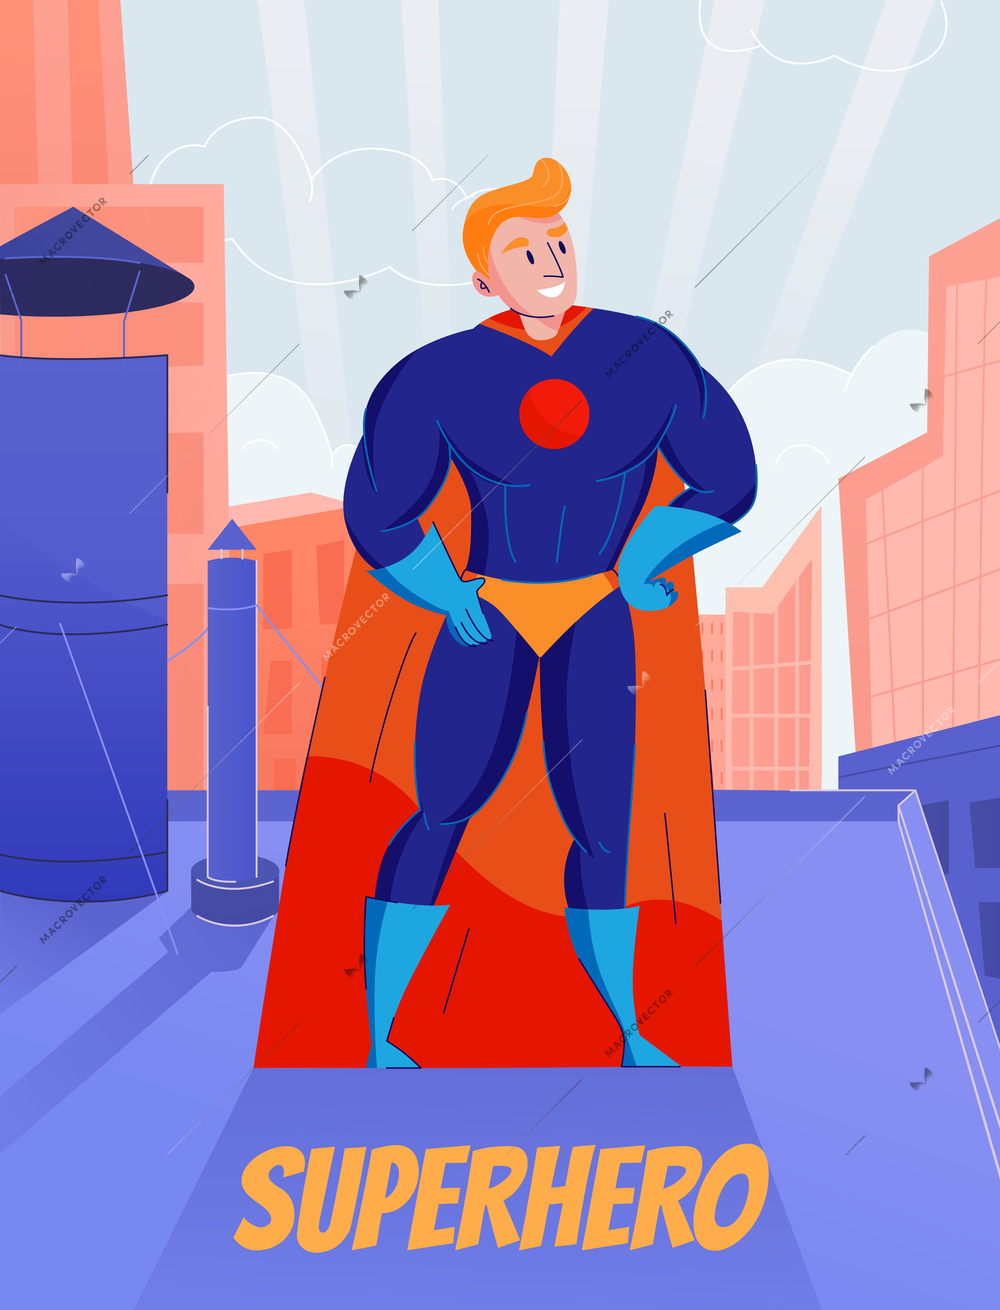 Superhero retro comic book character standing on roof in blue full bodysuit and orange cape vector illustration